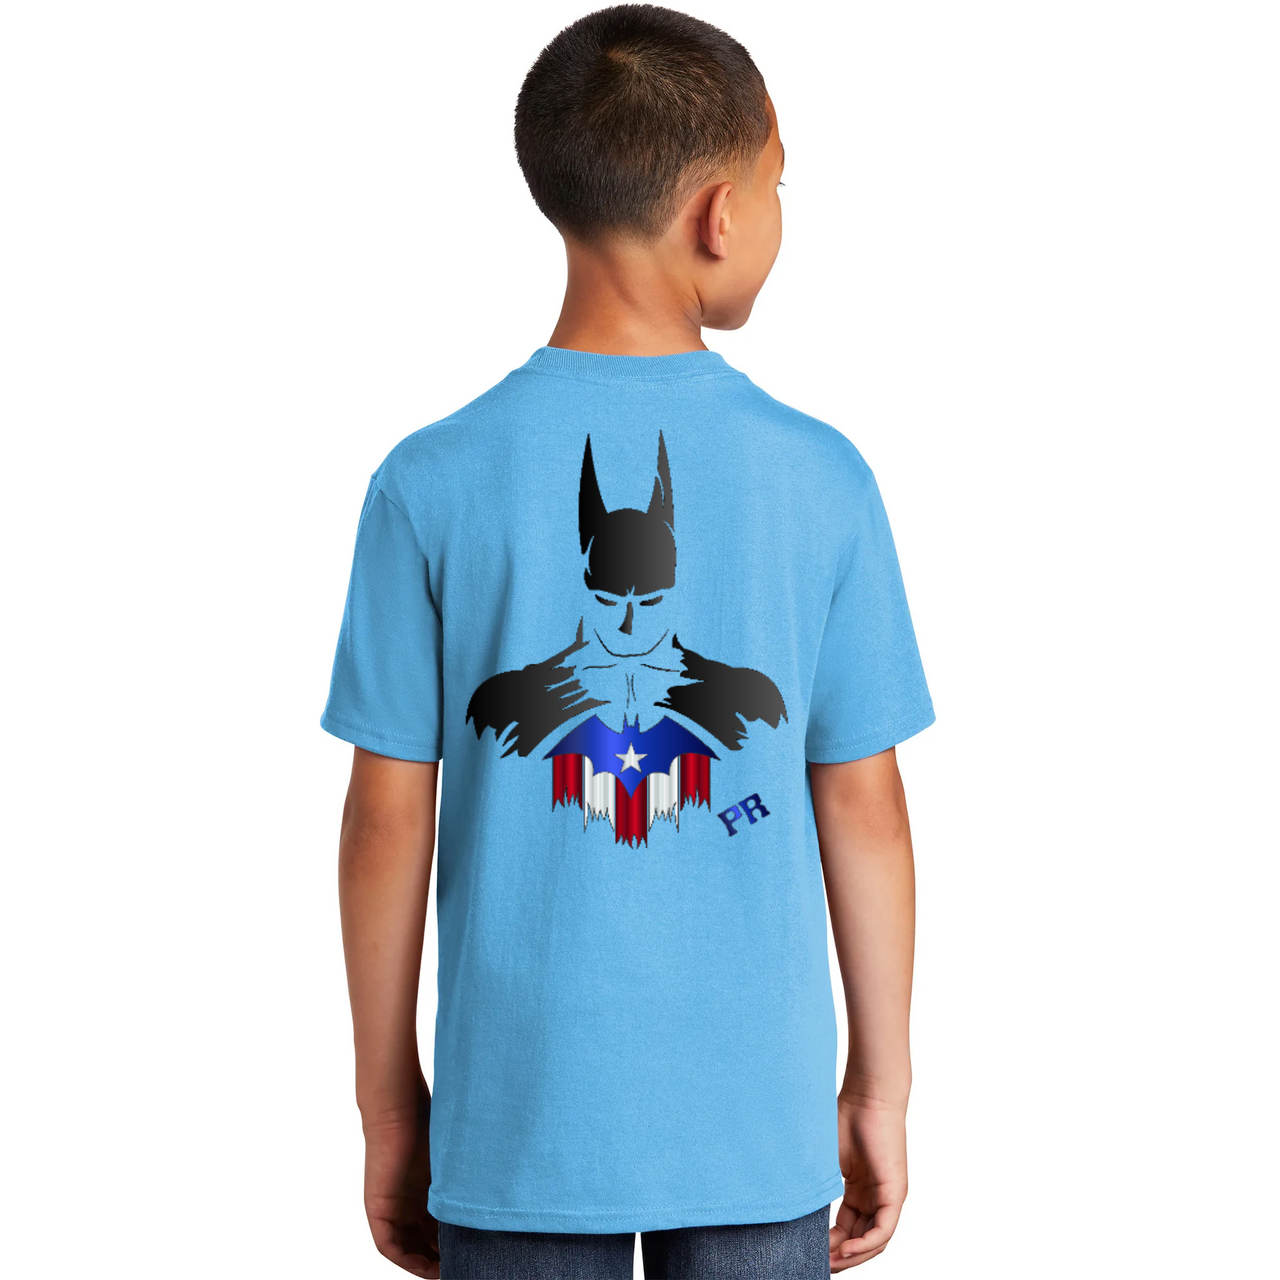 Puerto Rican Bat Man Front and Back Image Kids T-Shirt